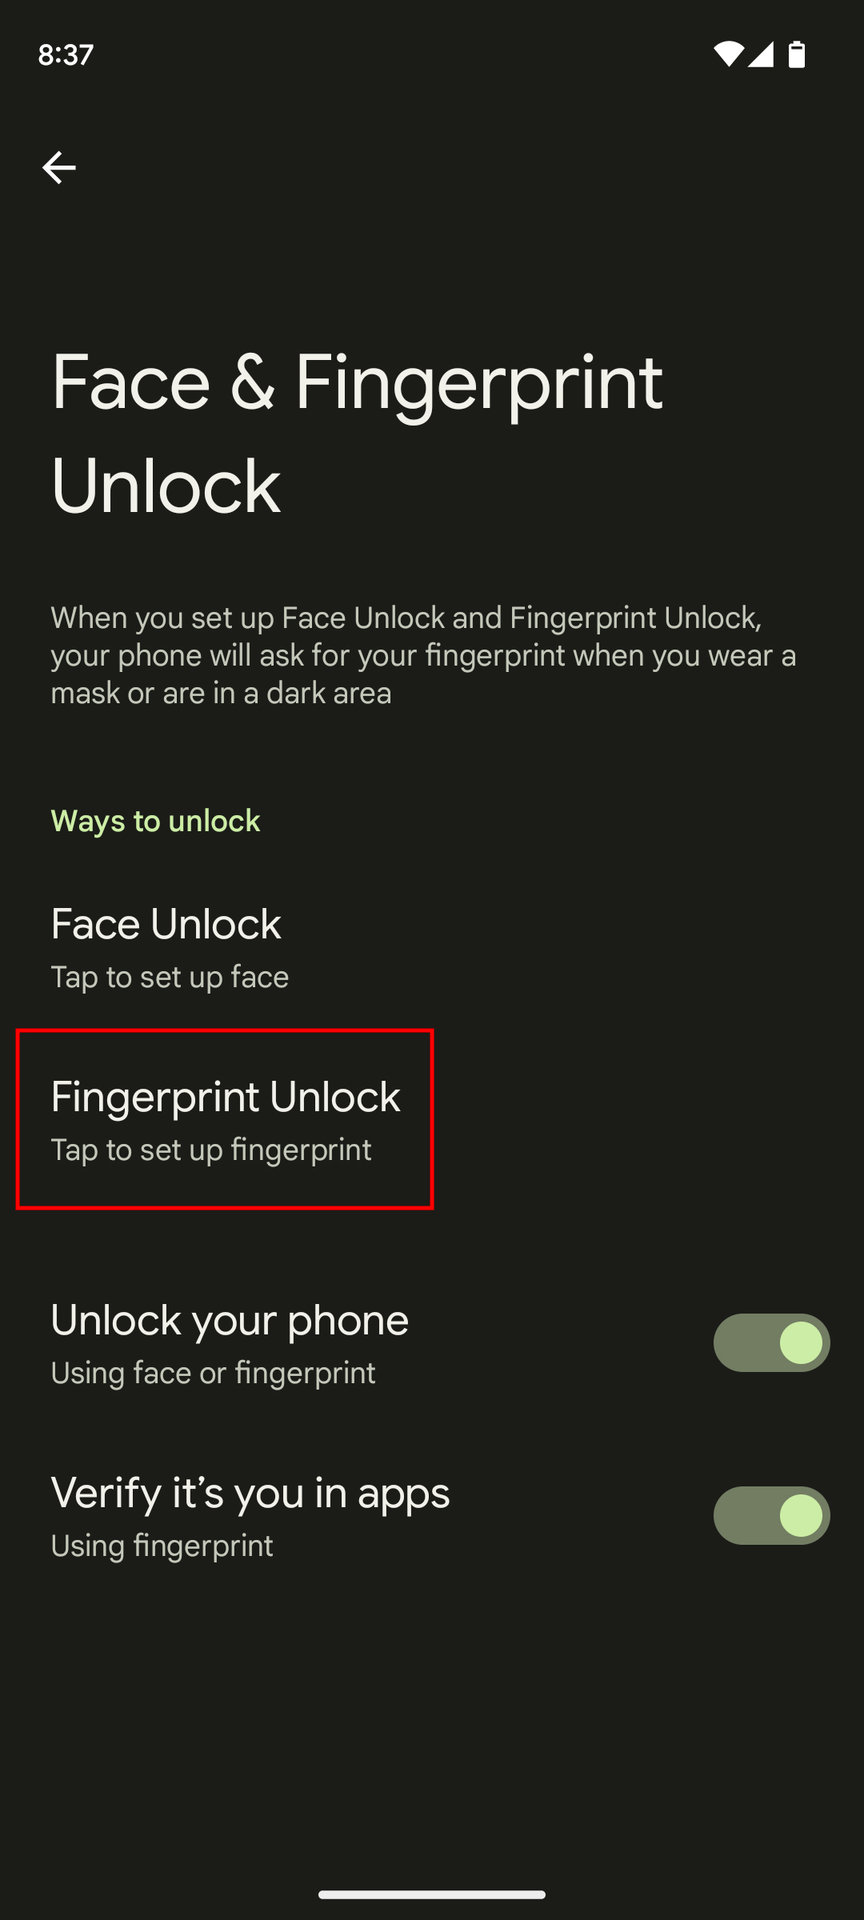 How to set up Fingerprint Unlock on Pixel 4